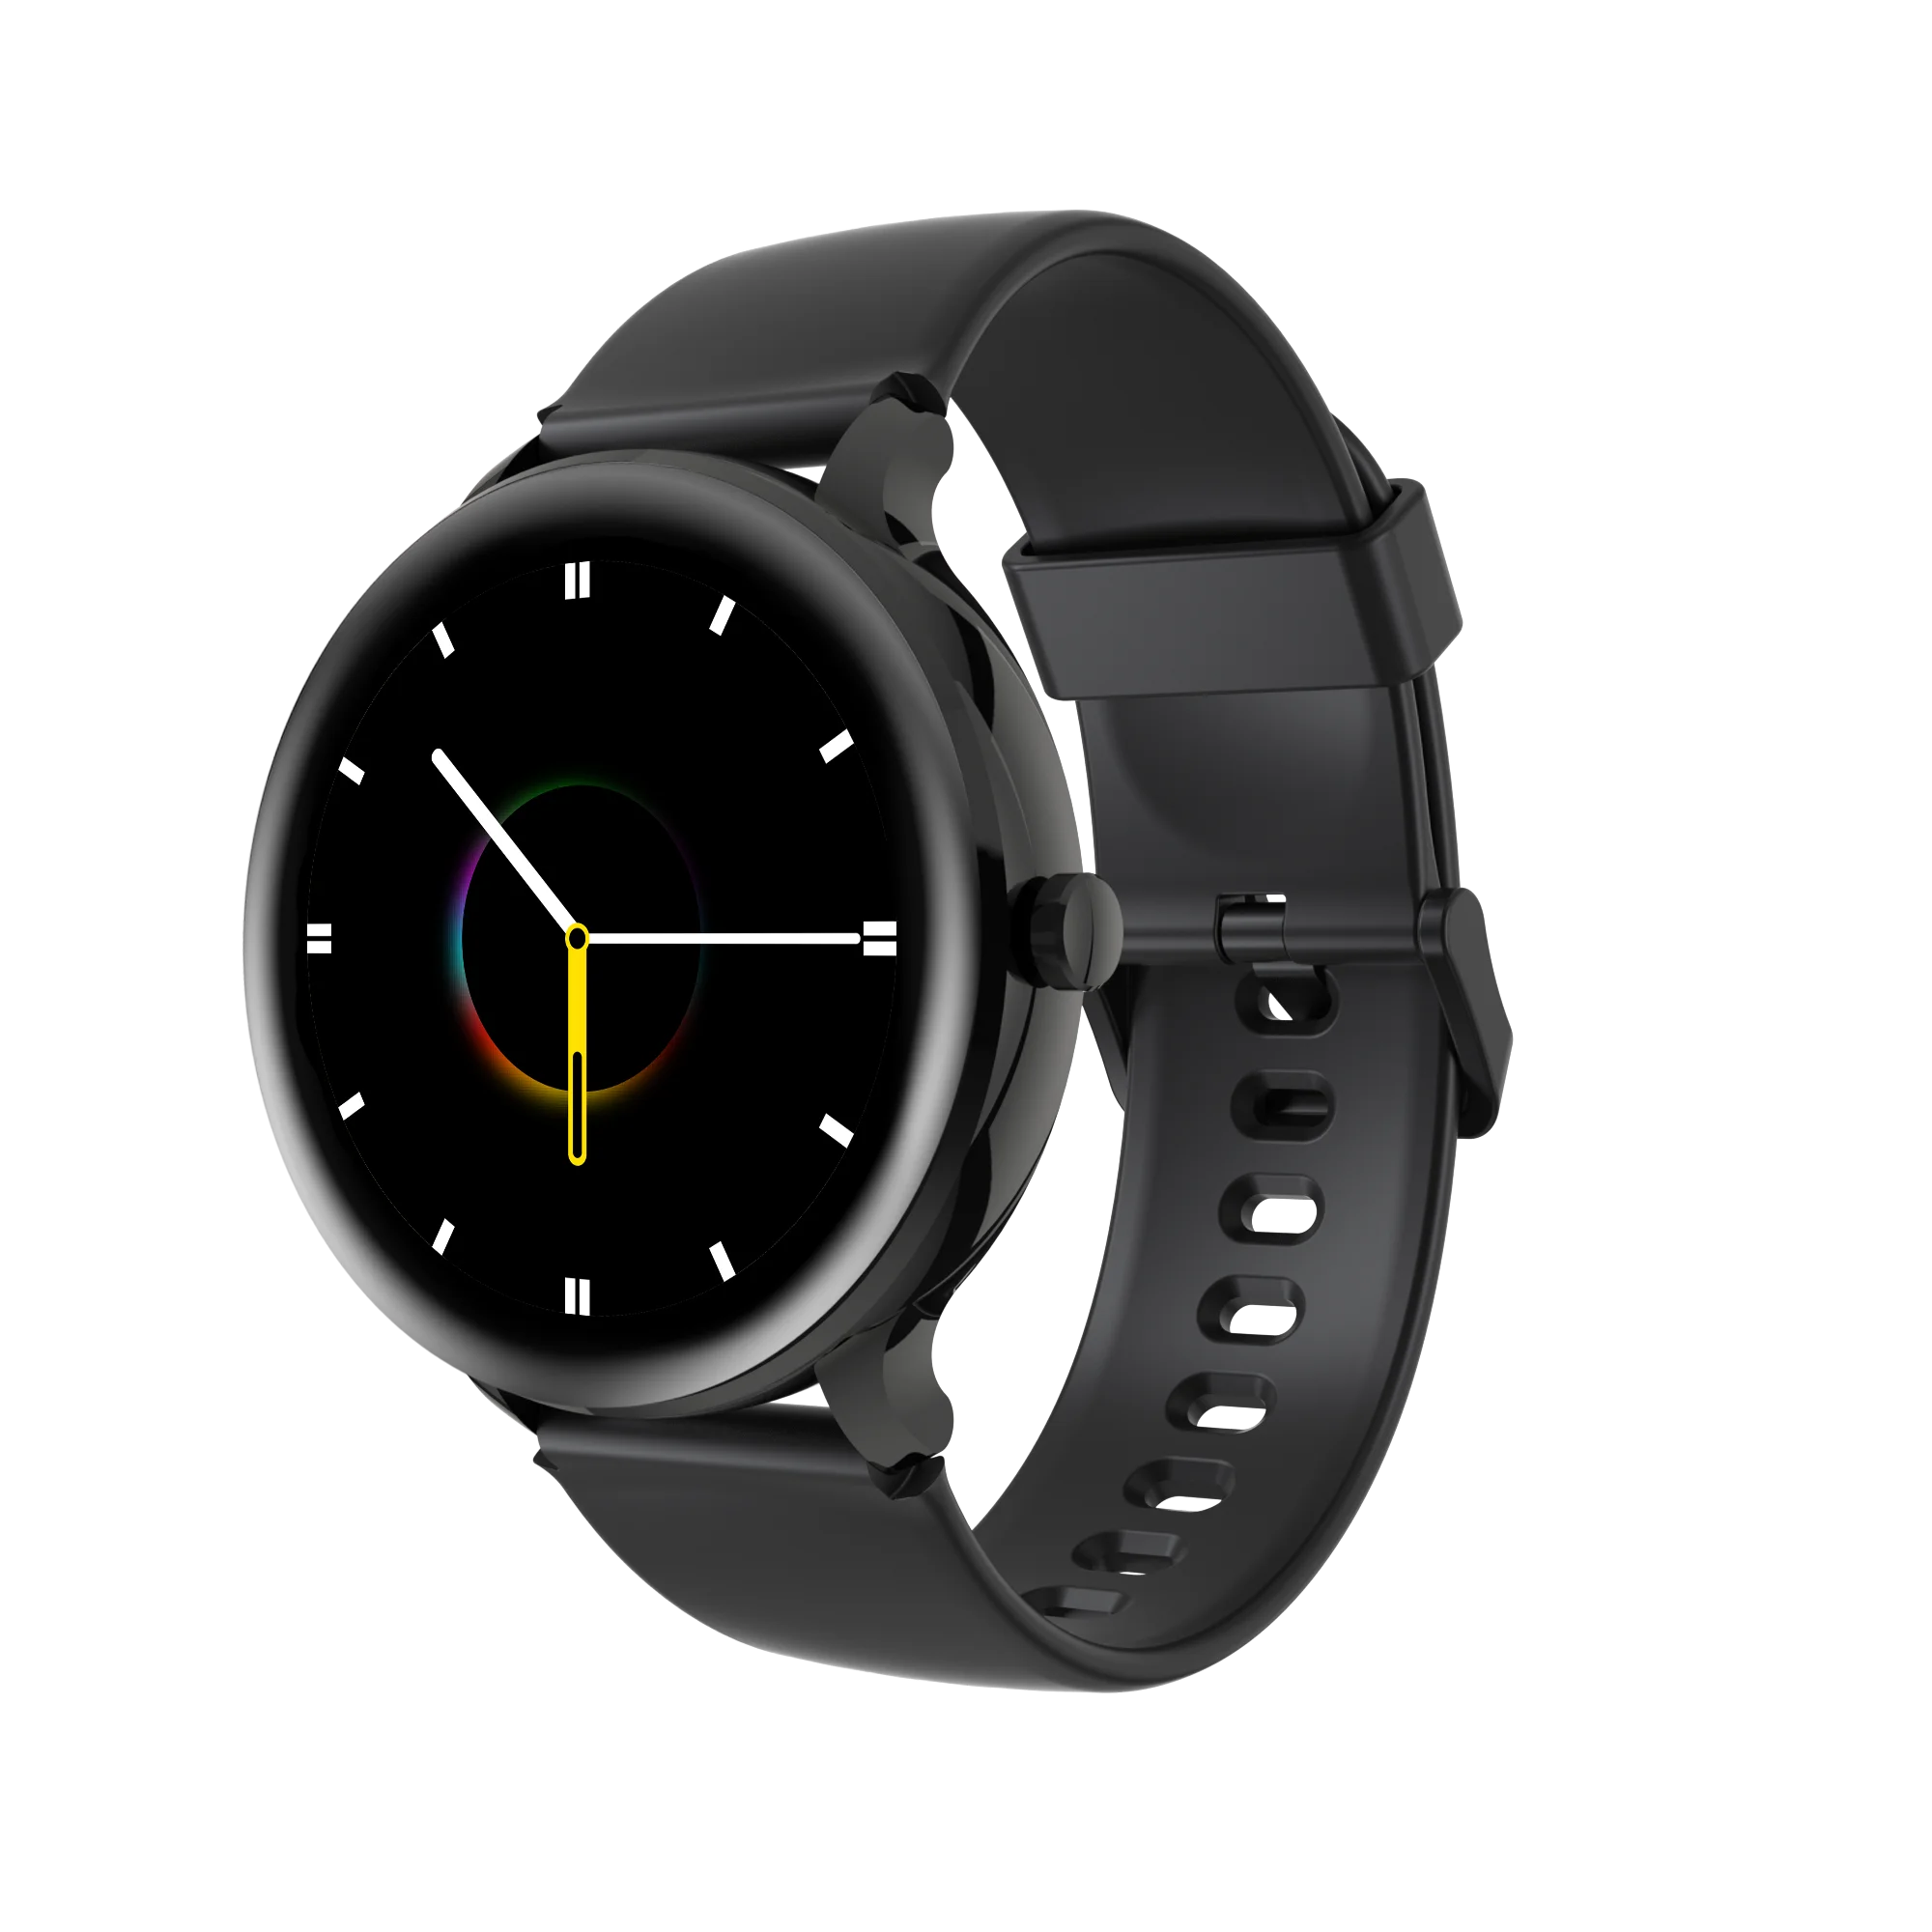 Blackview X2 smartwatch 1.3inch Display 260mAh battery 5ATM Waterproof Heart Rate Track Sport Watch